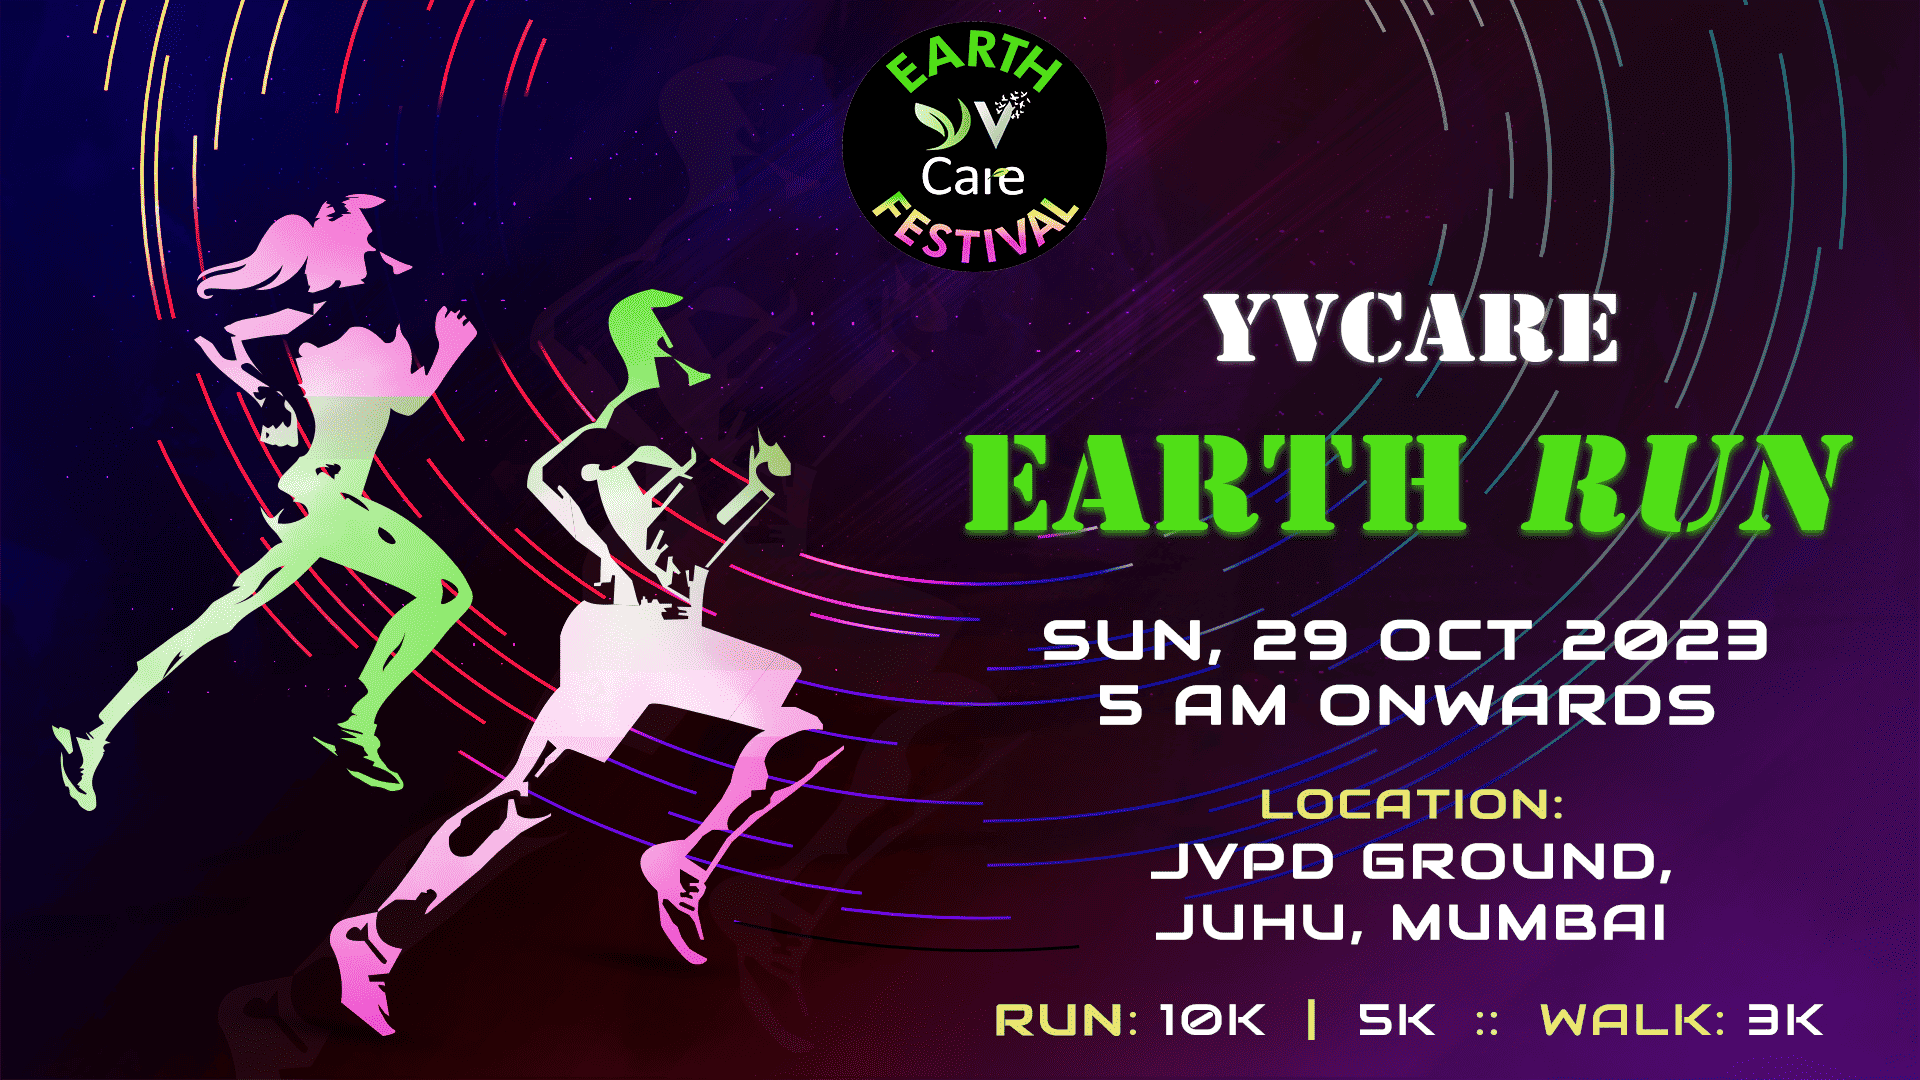 YVCare Earth Run